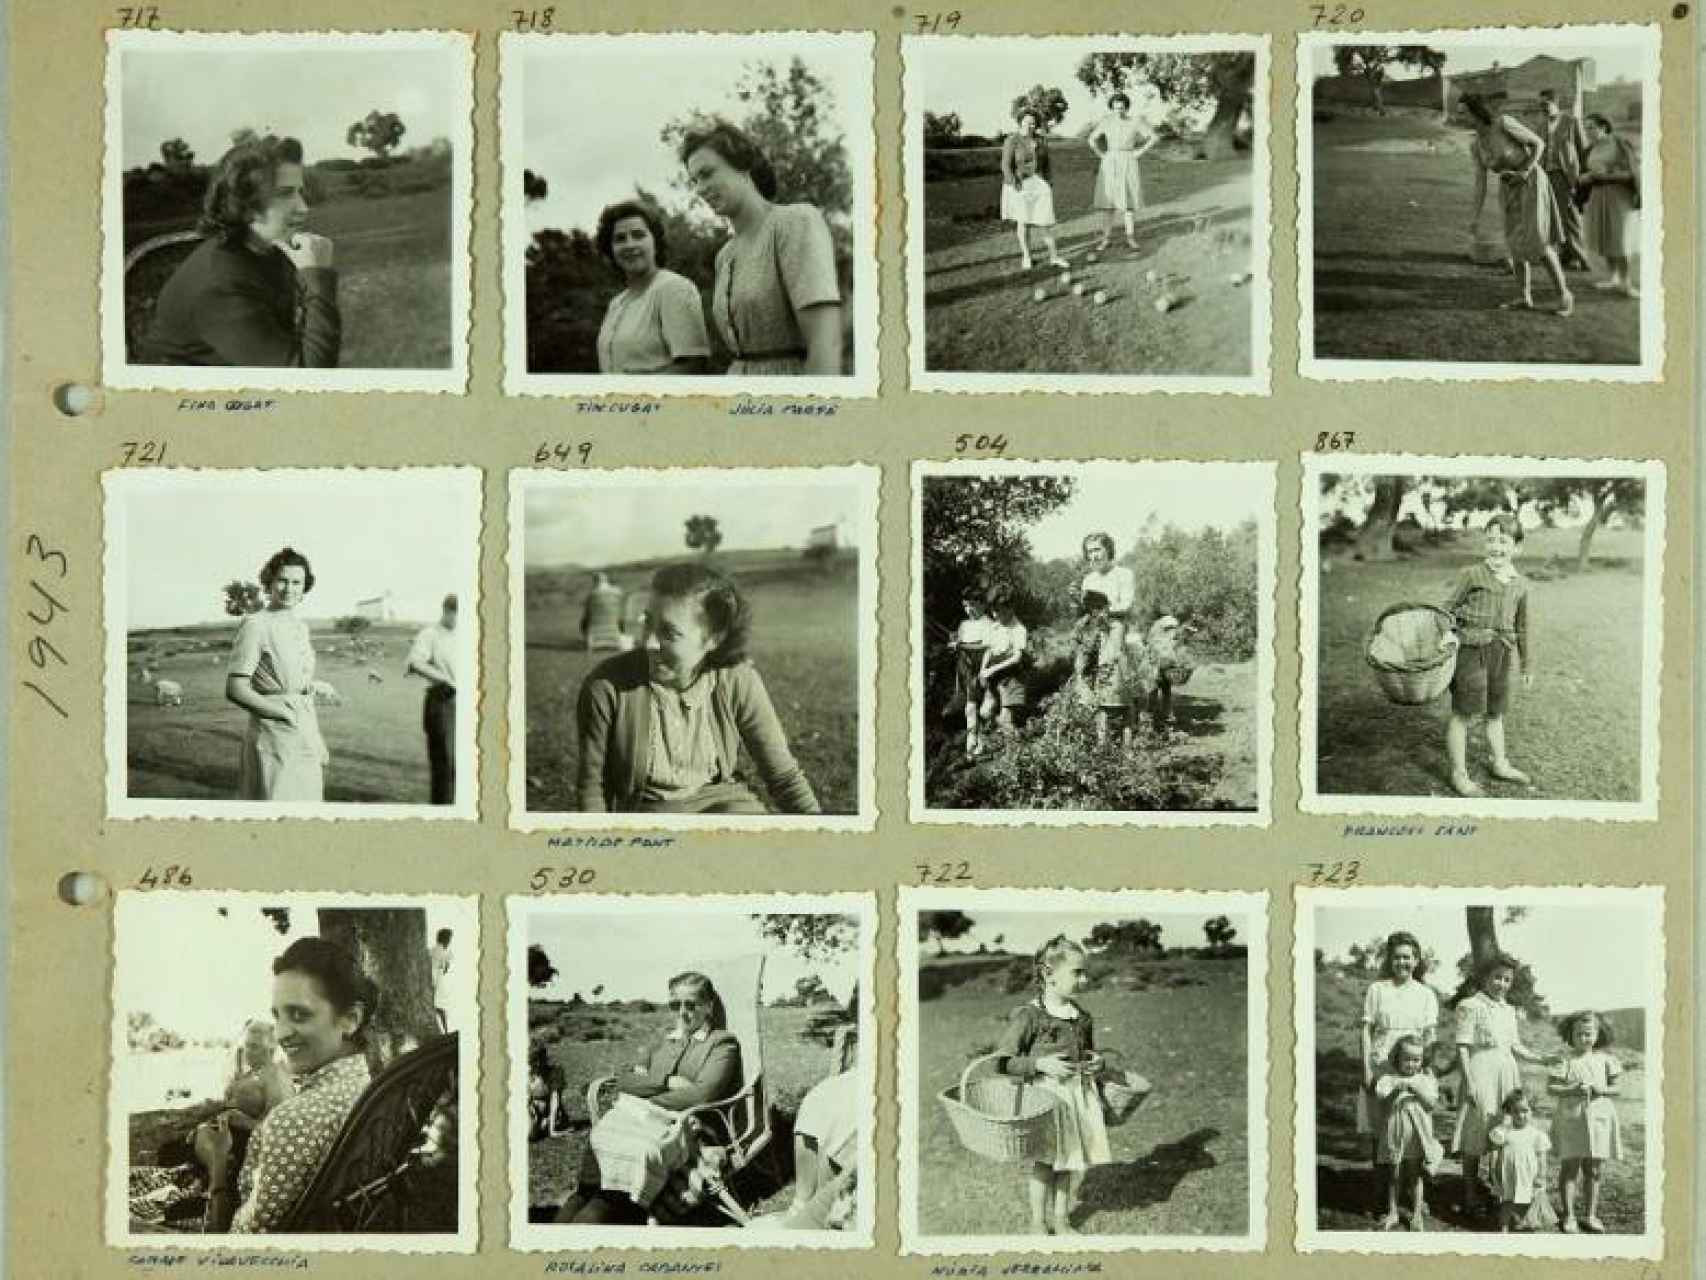 El Arxiu Fotografic dedicará una muestra a la fotografía en el ámbito faliliar